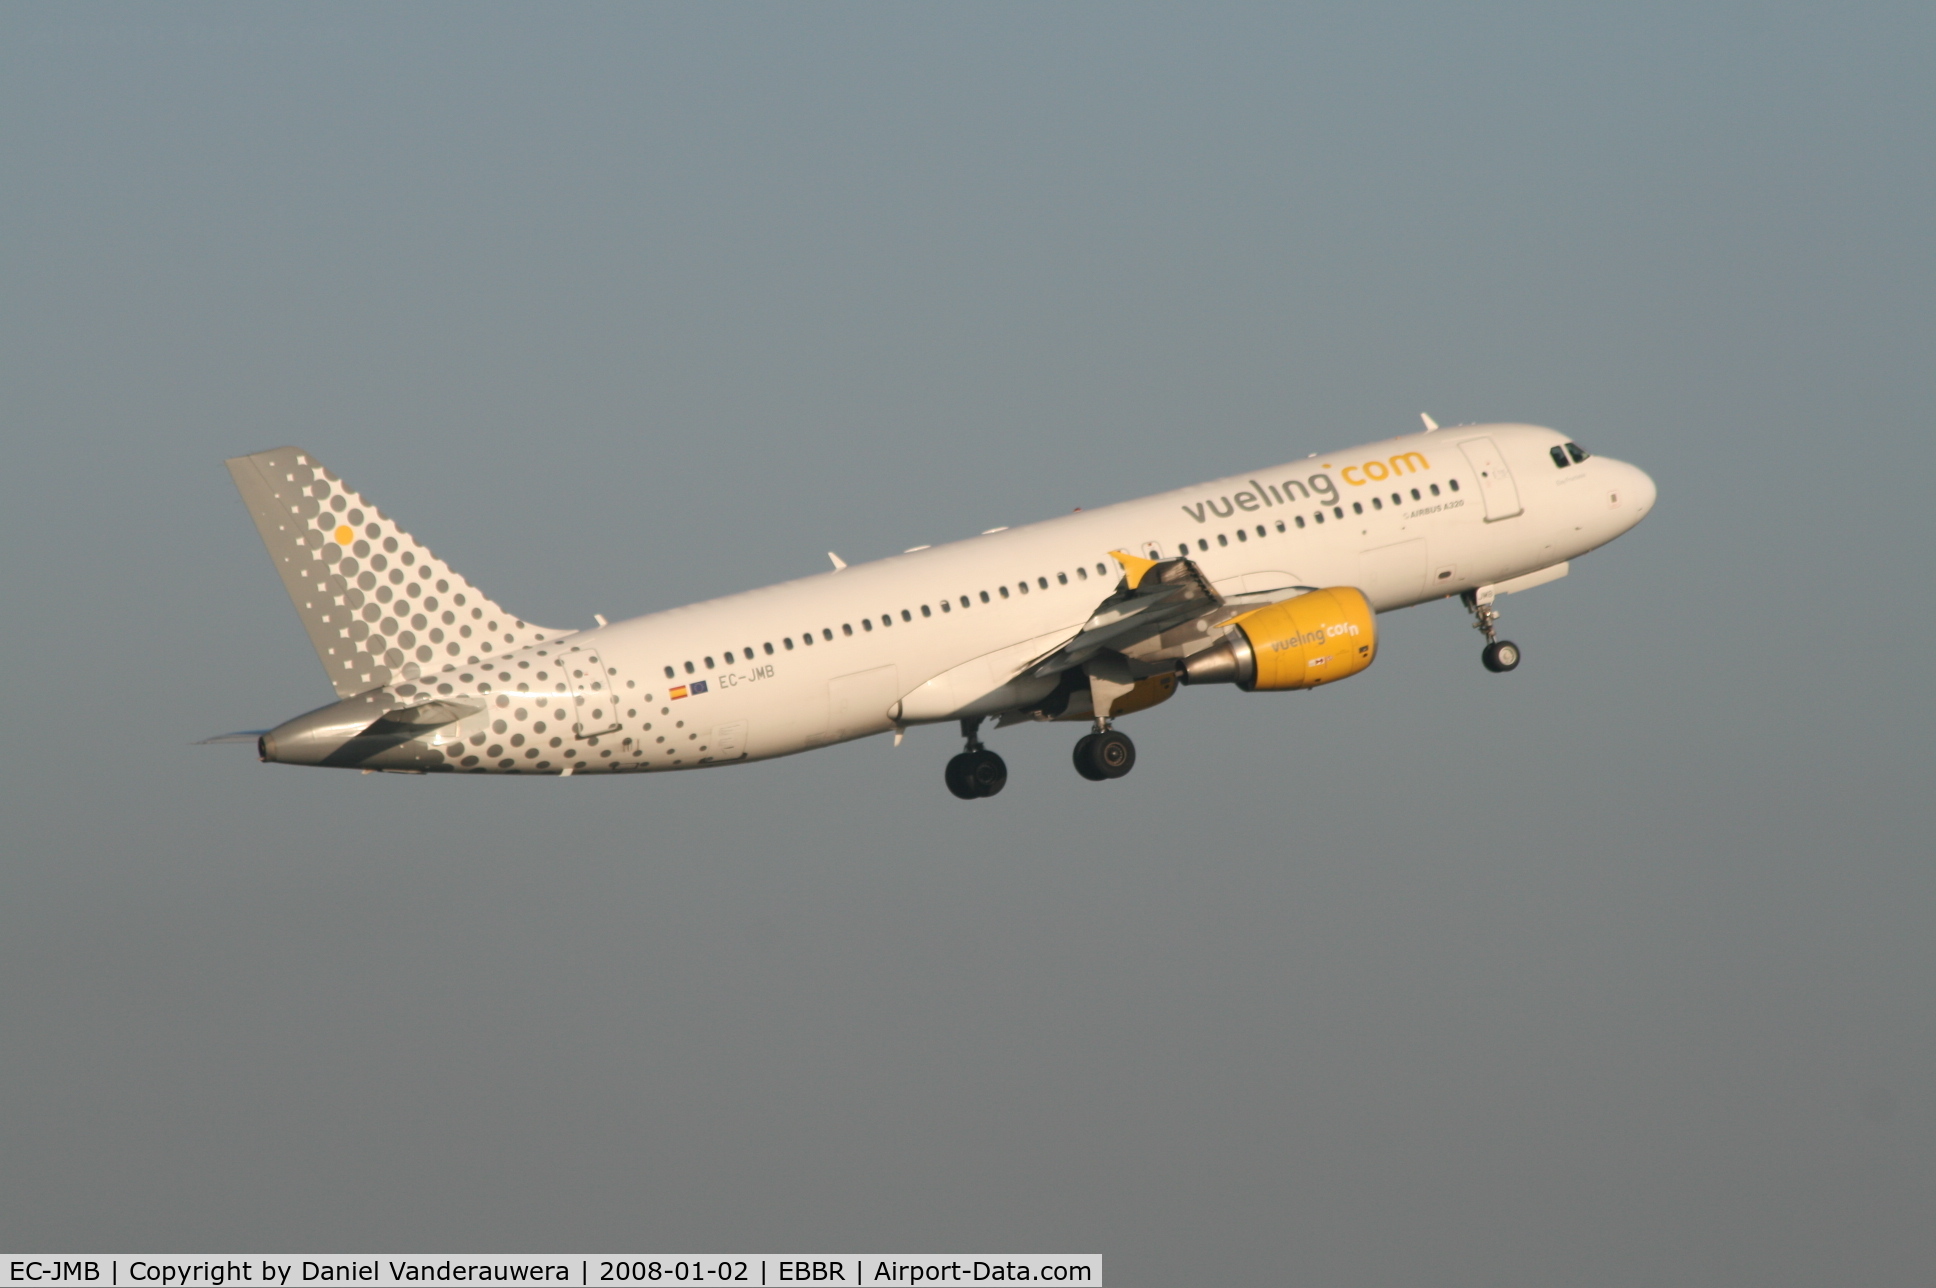 EC-JMB, 2005 Airbus A320-214 C/N 2540, flight VY8729 is taking off from rwy 07R